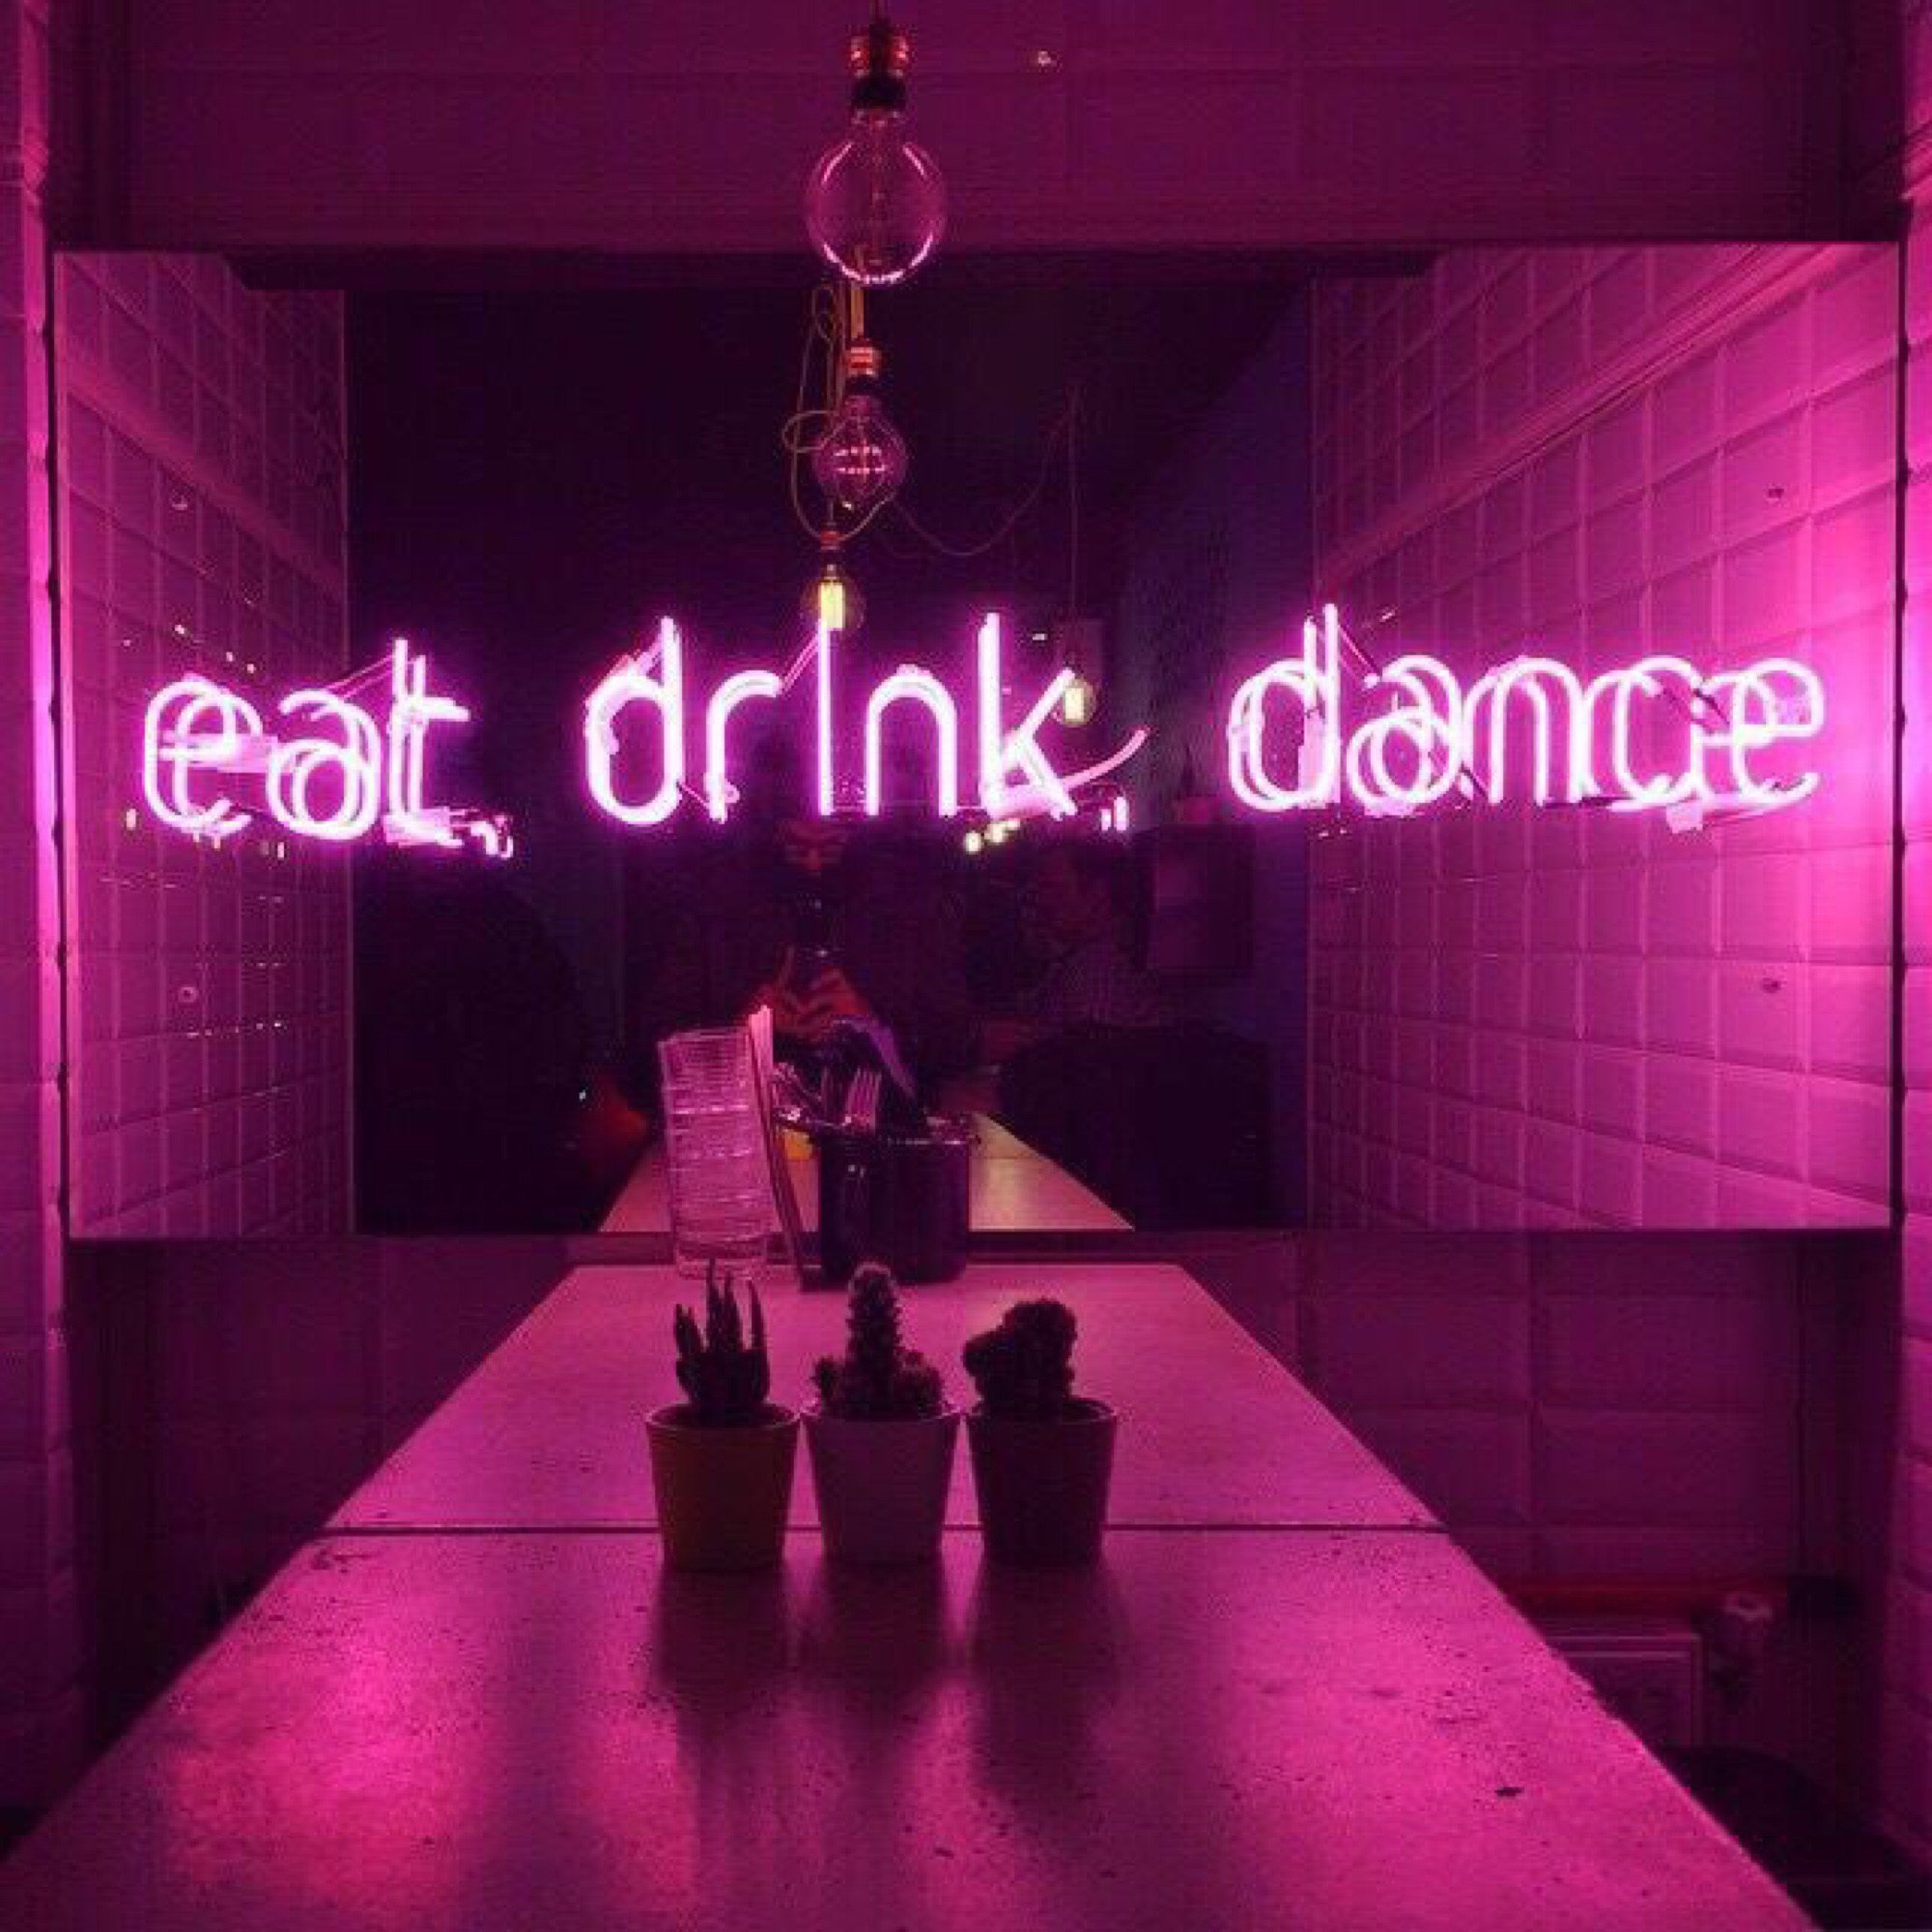 Eat drink dance